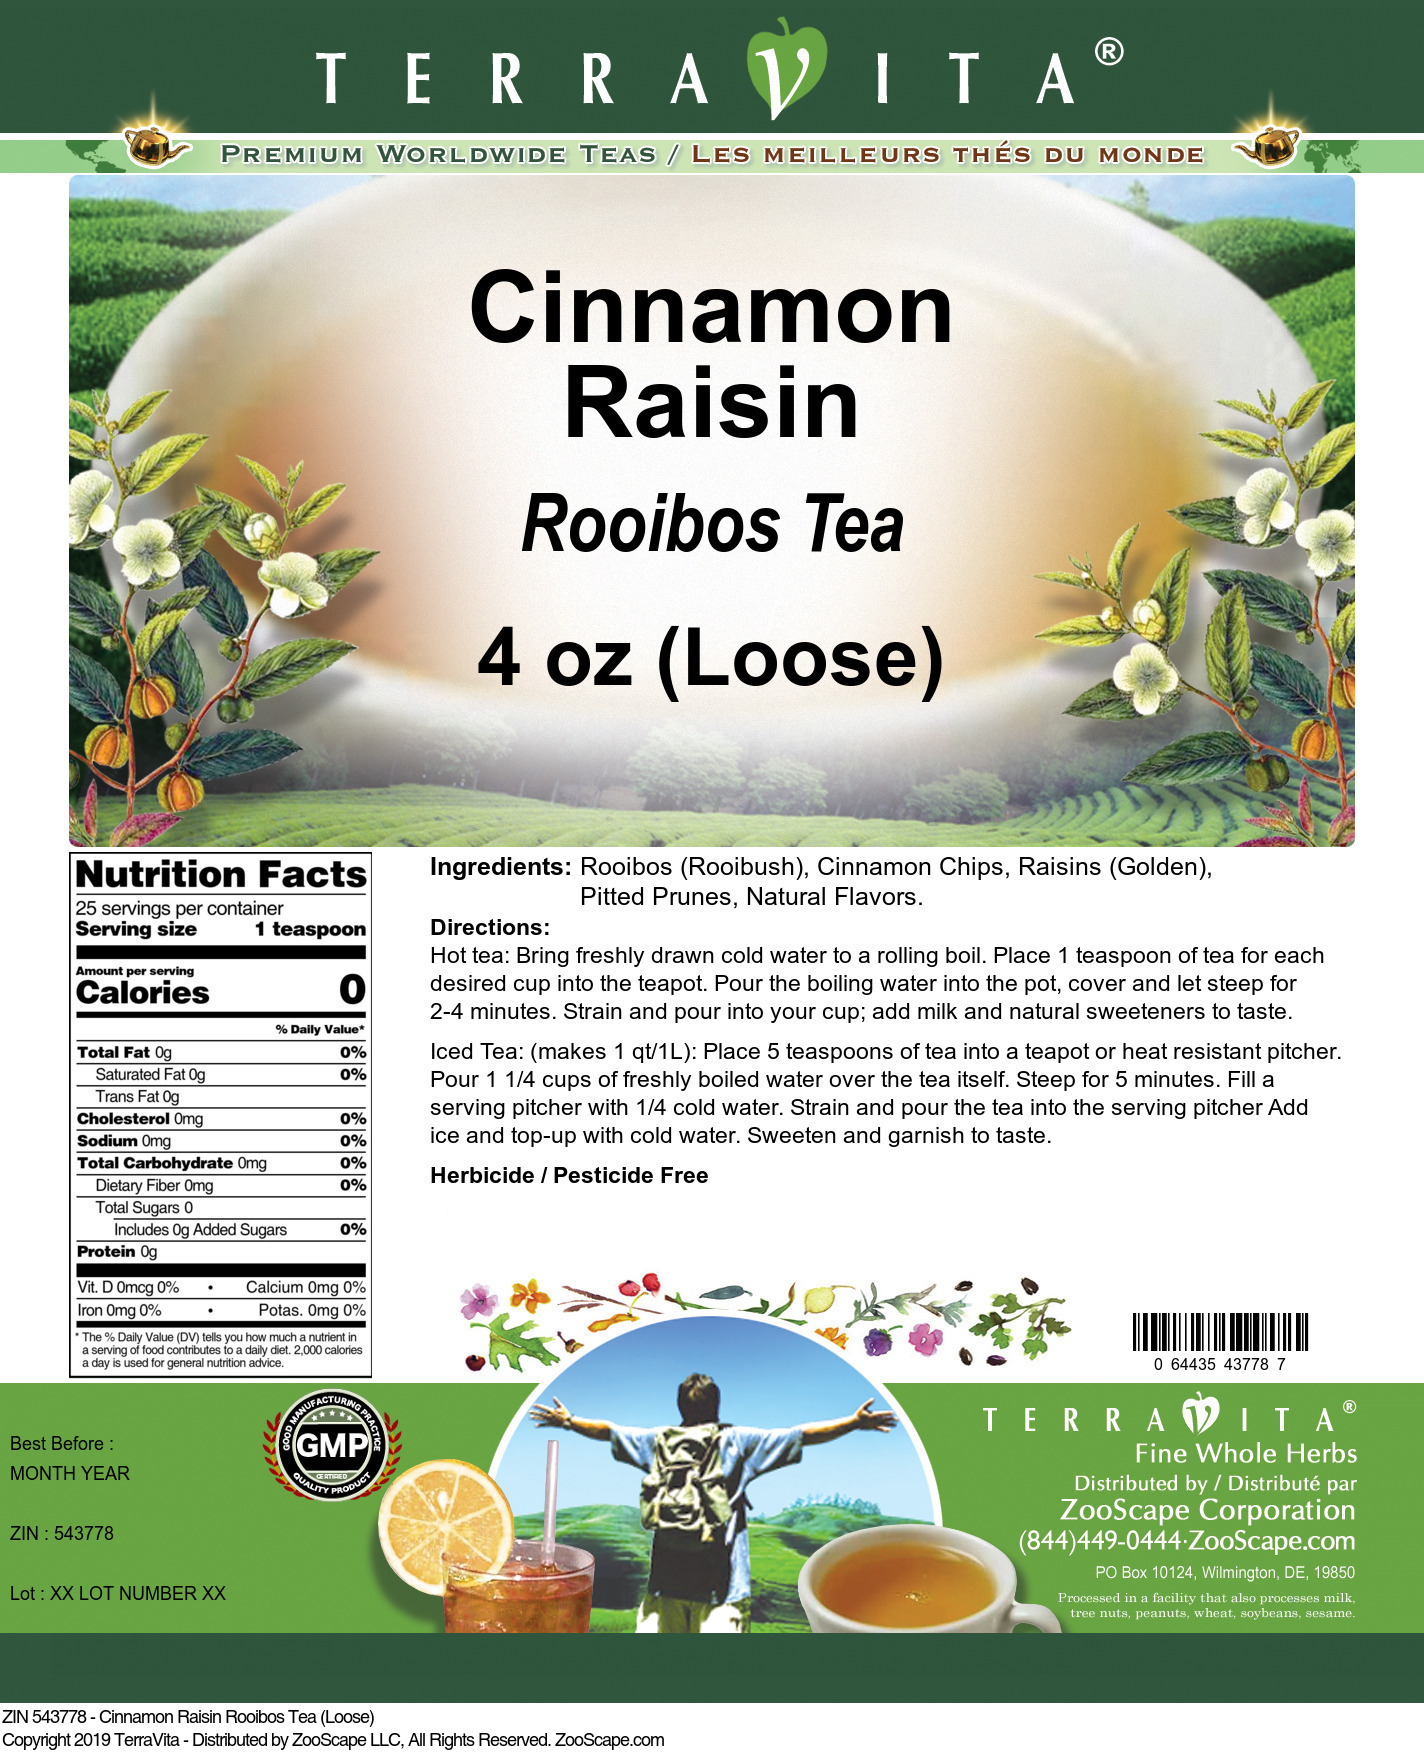 Cinnamon Raisin Rooibos Tea (Loose) - Label